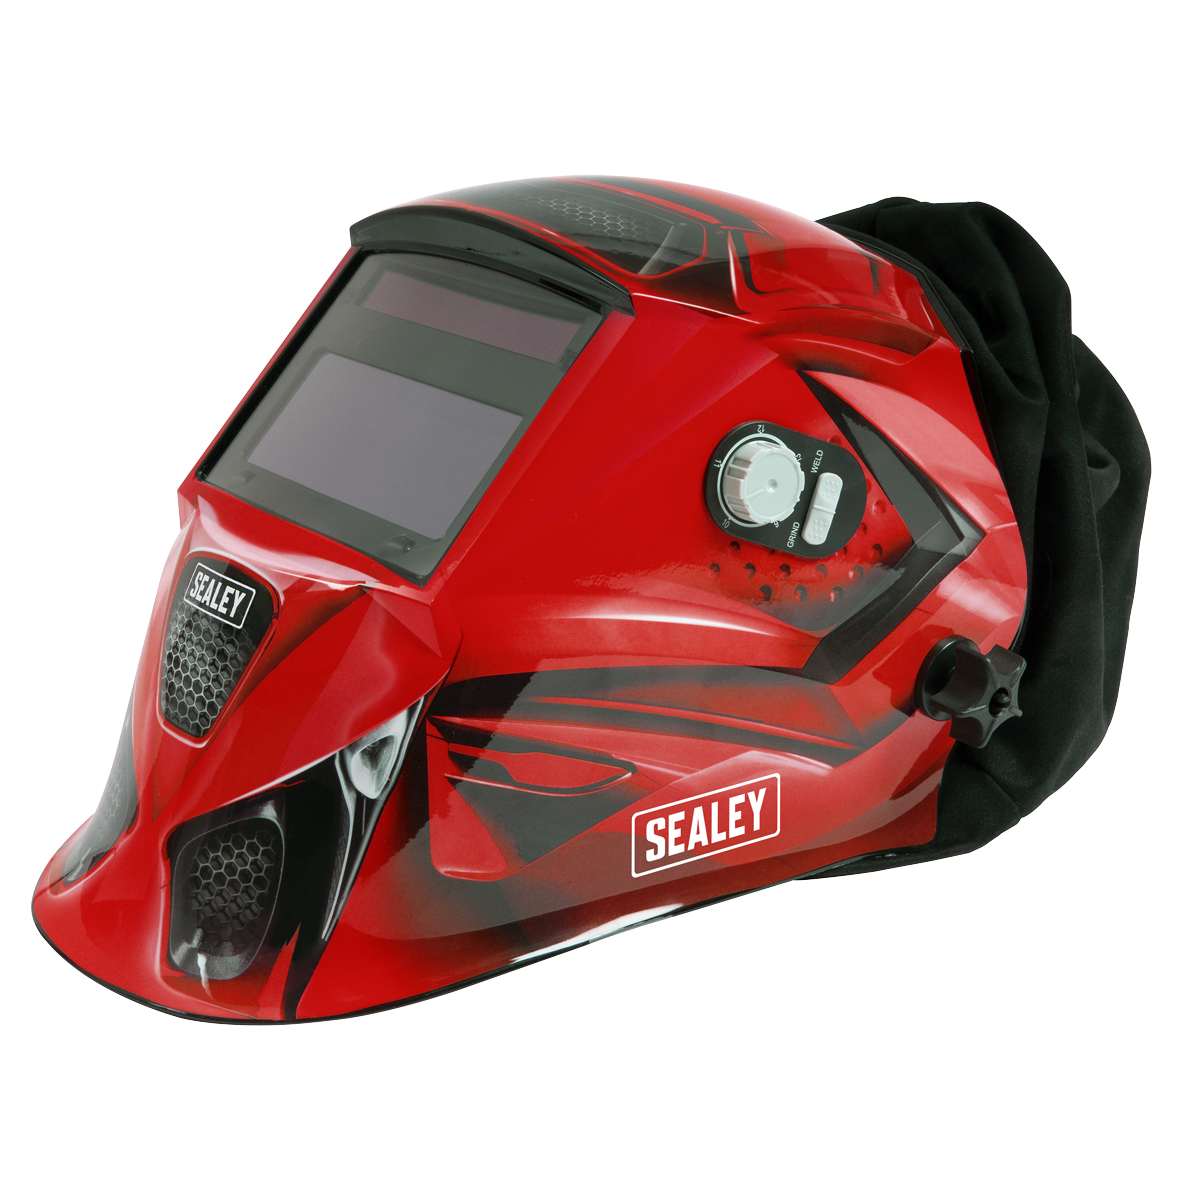 Sealey helmet with adjustable shade control